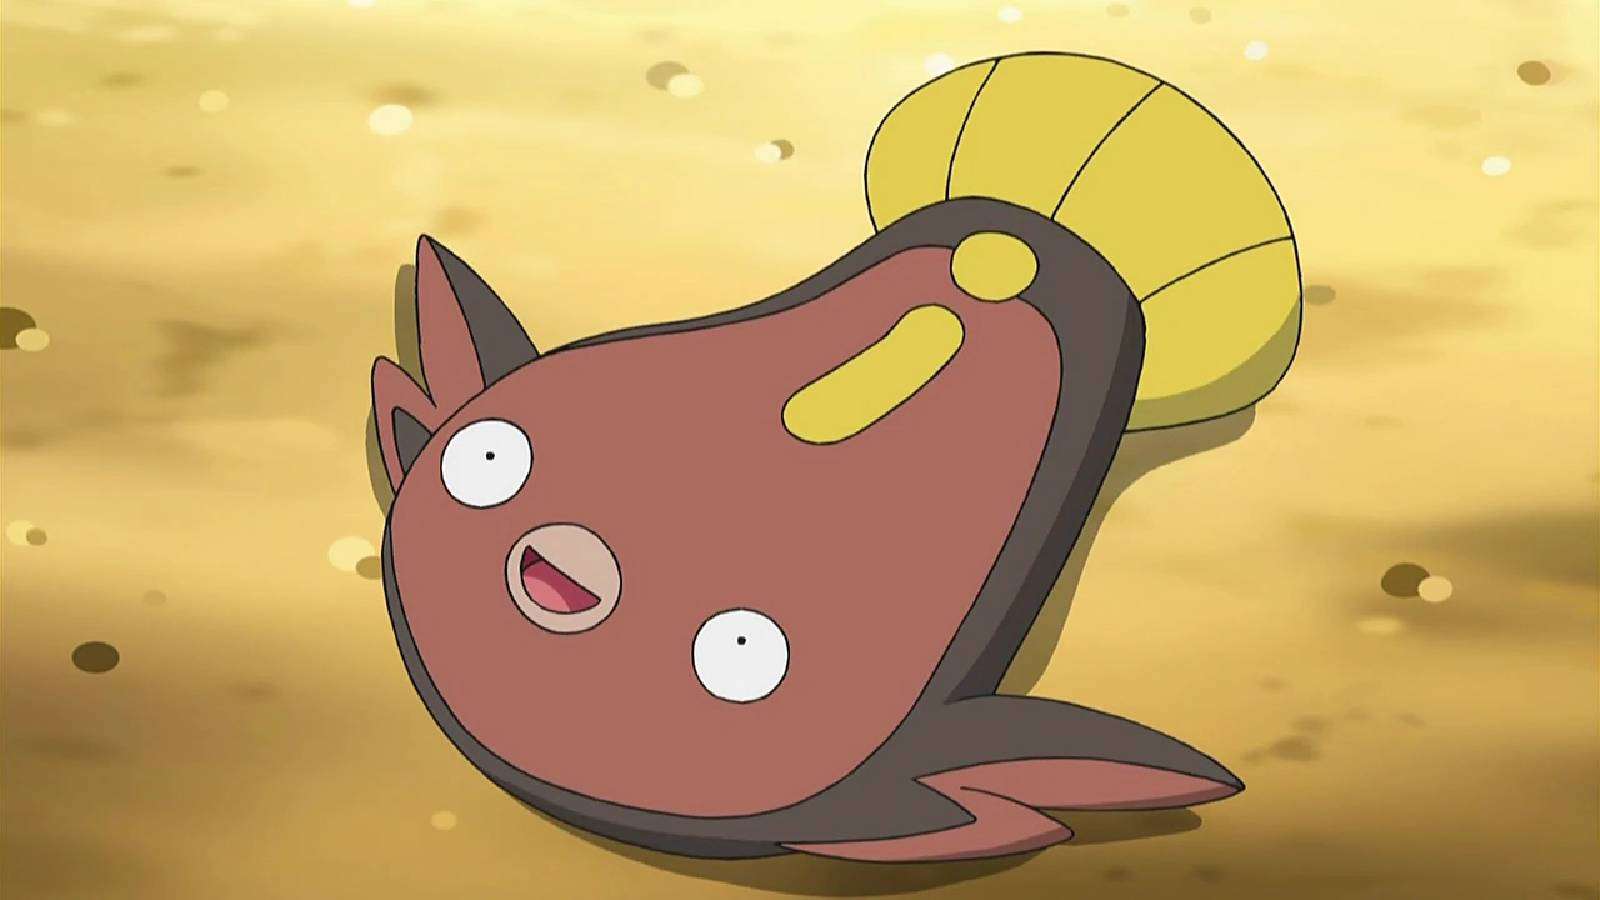 The Pokemon Stunfisk looks happily upwards while it lays flat on the ground